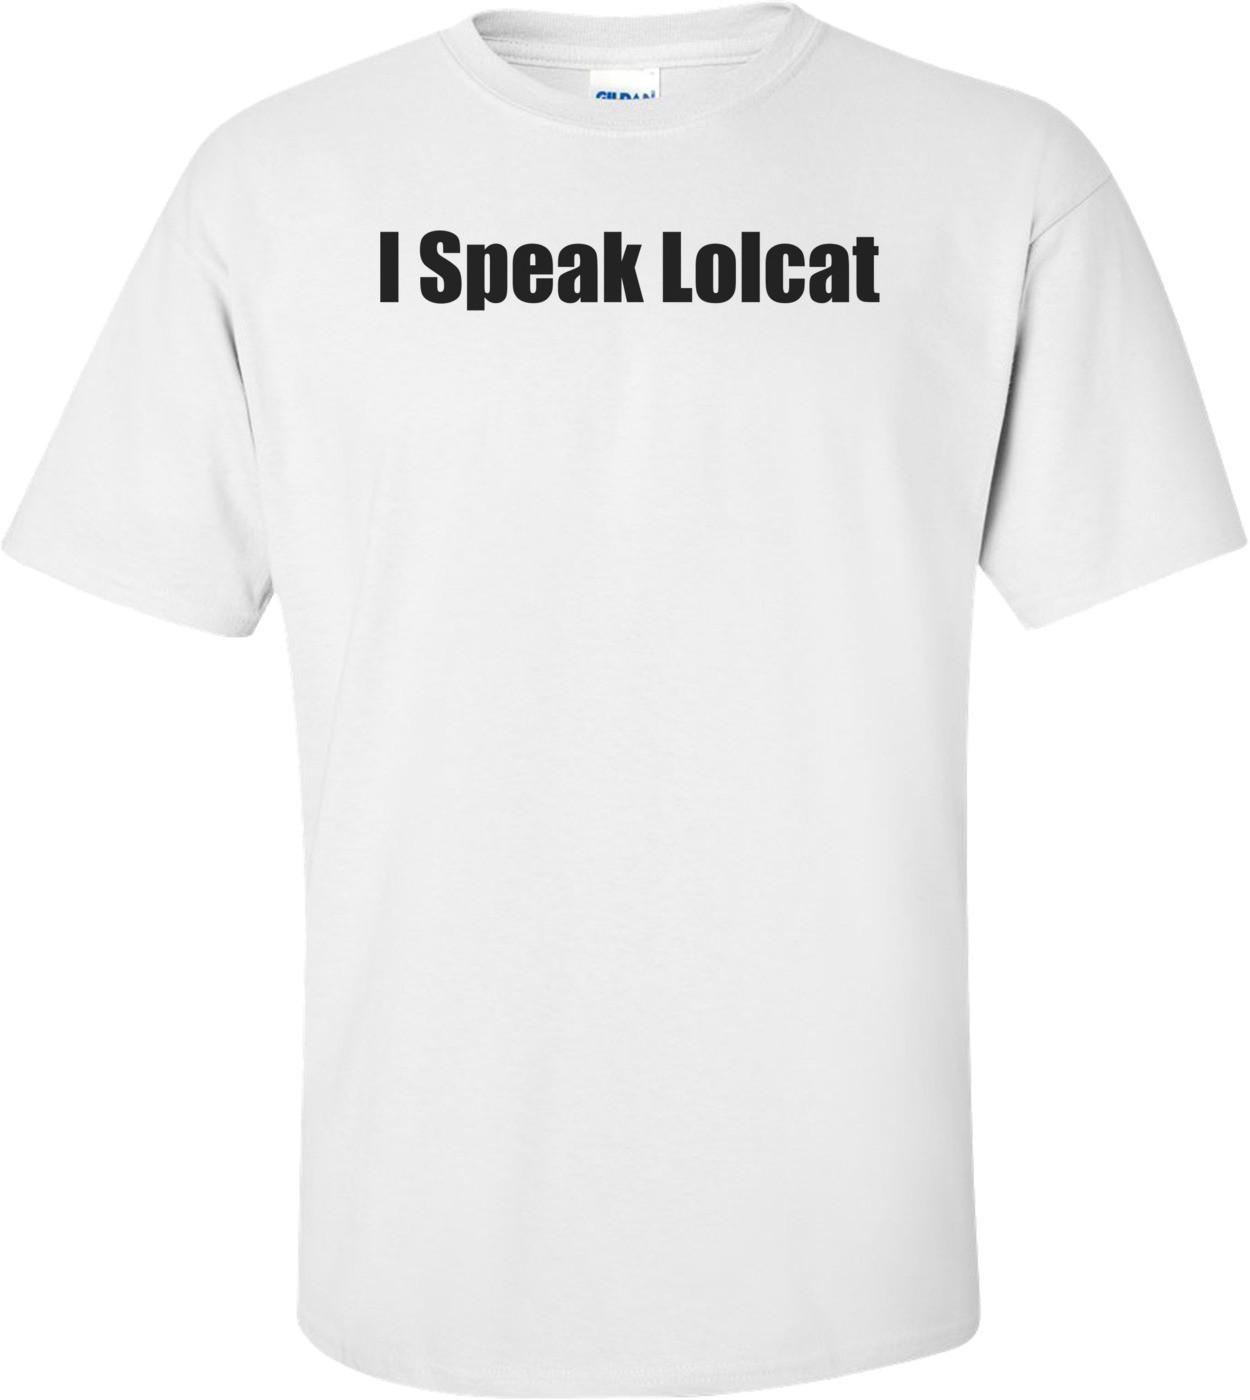 I Speak Lolcat T-Shirt